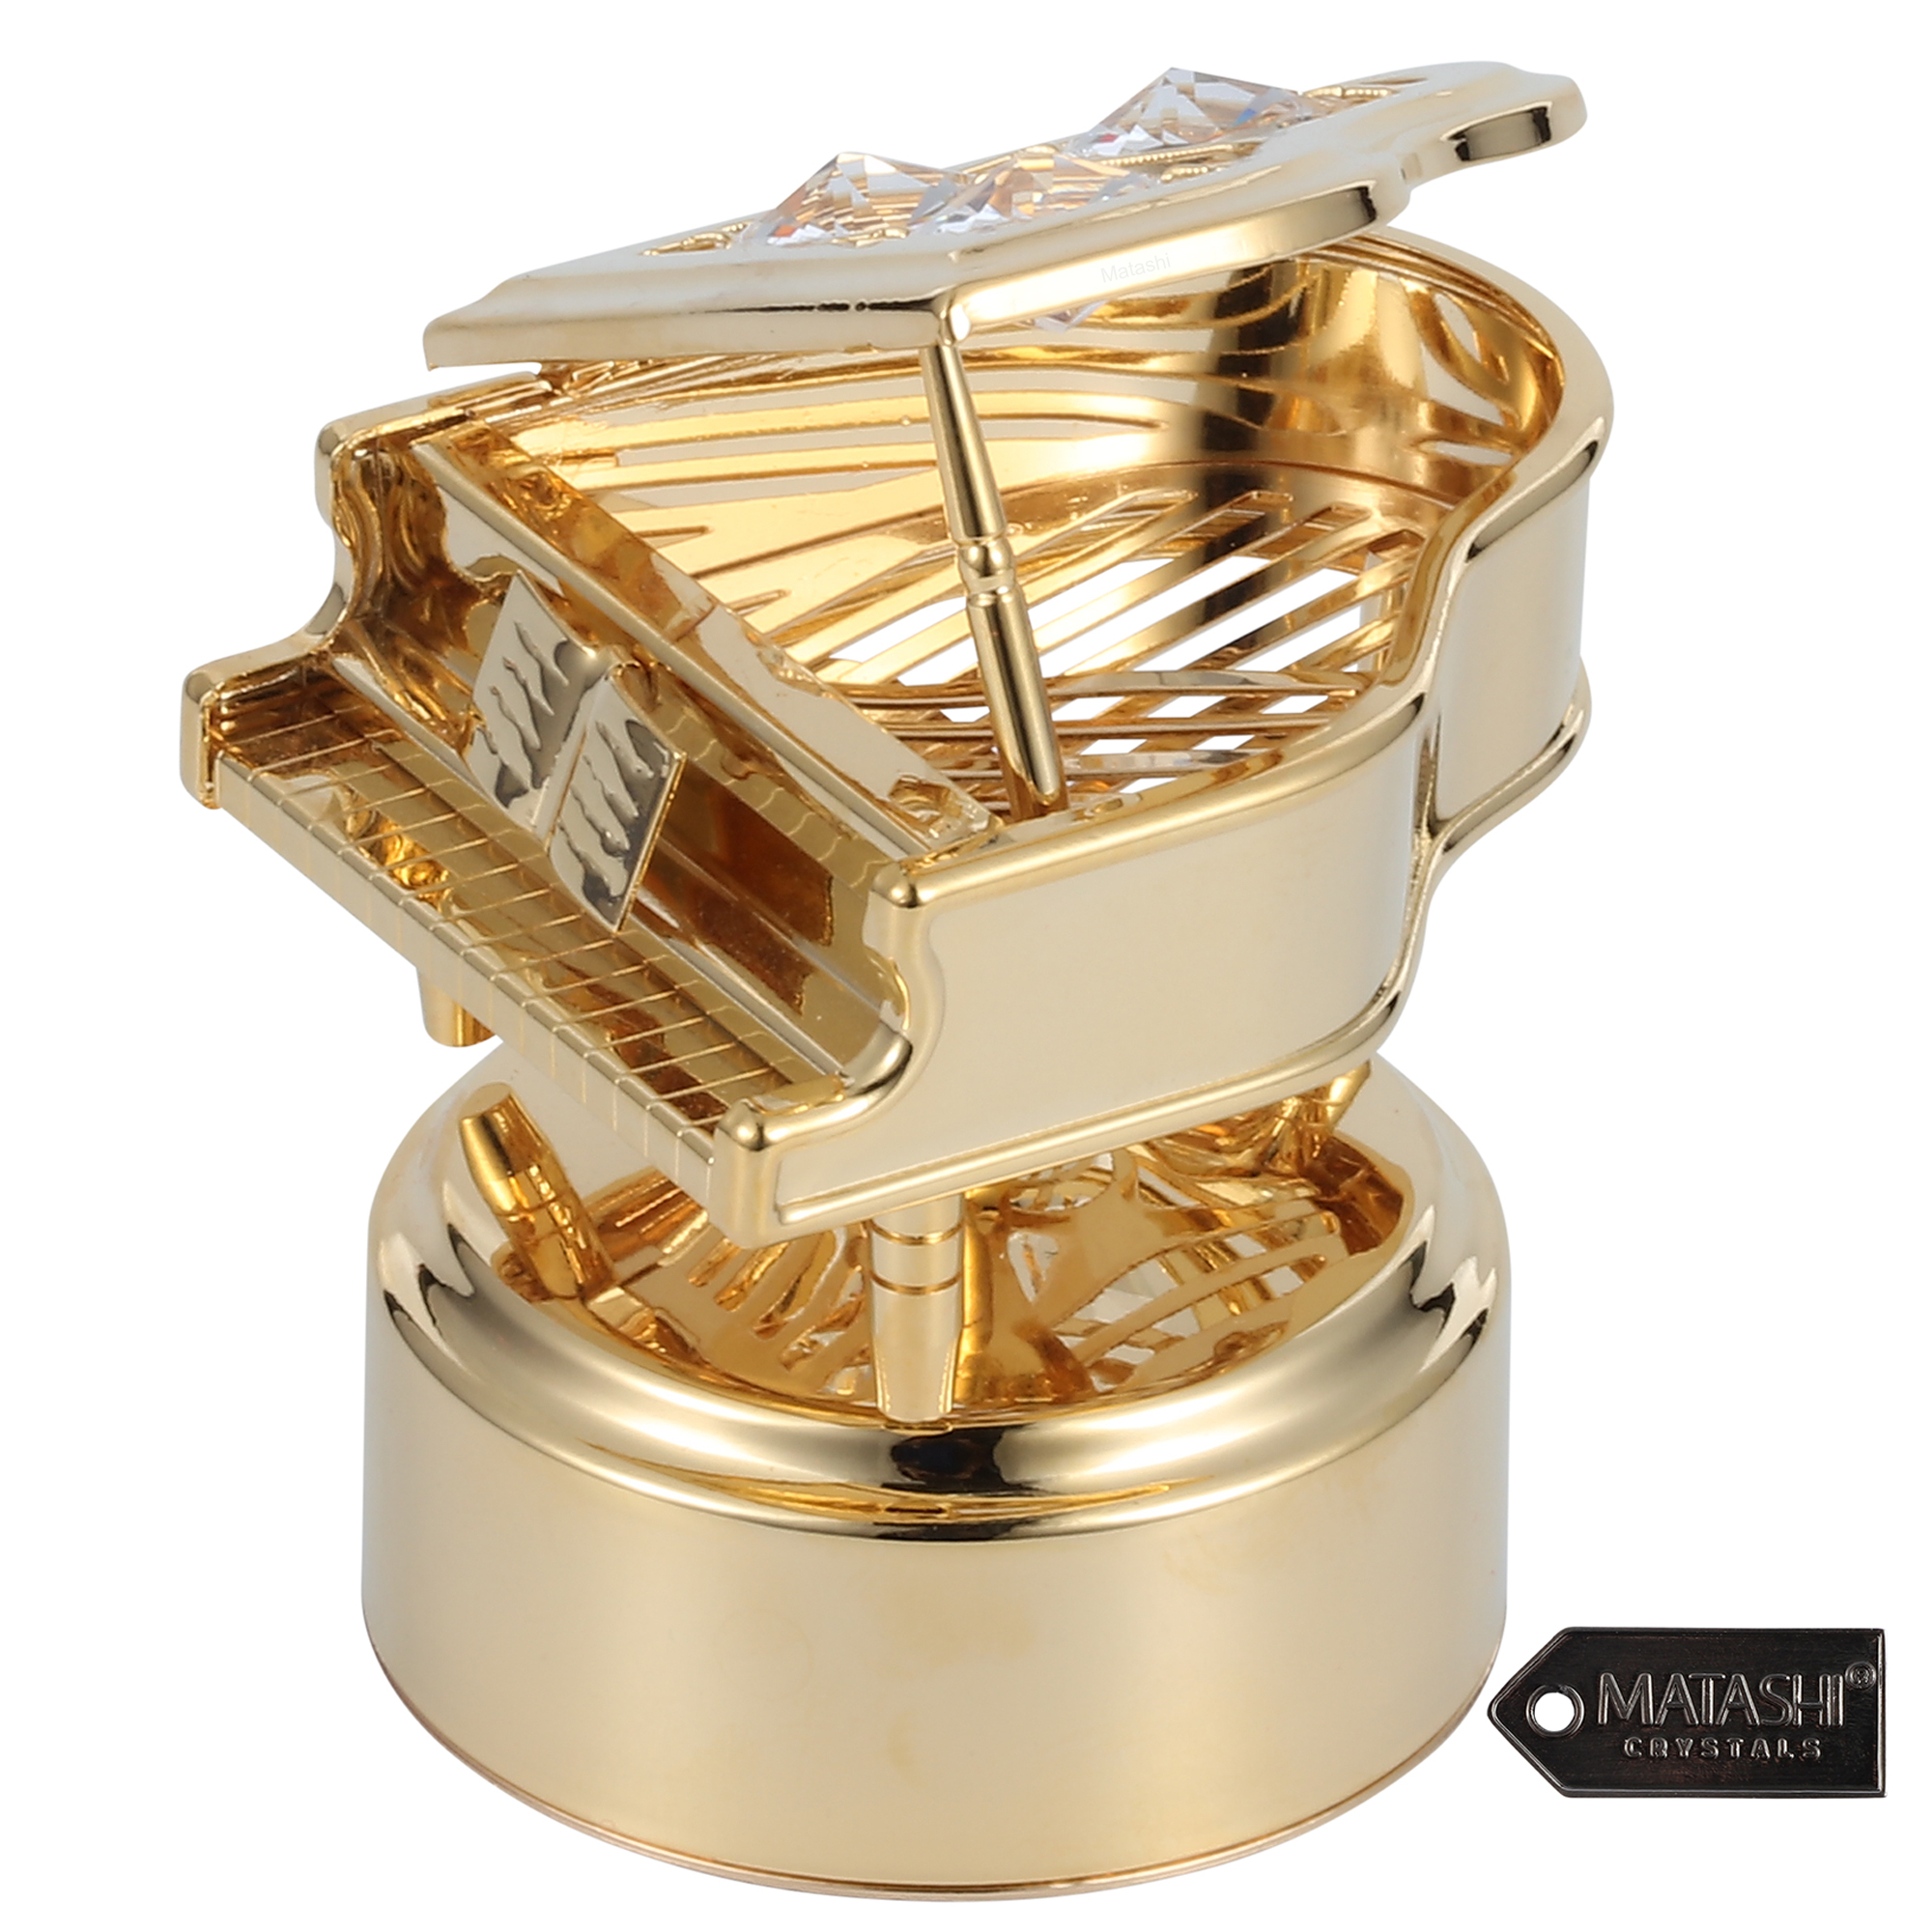 Matashi 24K Gold Plated Wind Up Music Box With Crystal Studded Grand Piano Figurine